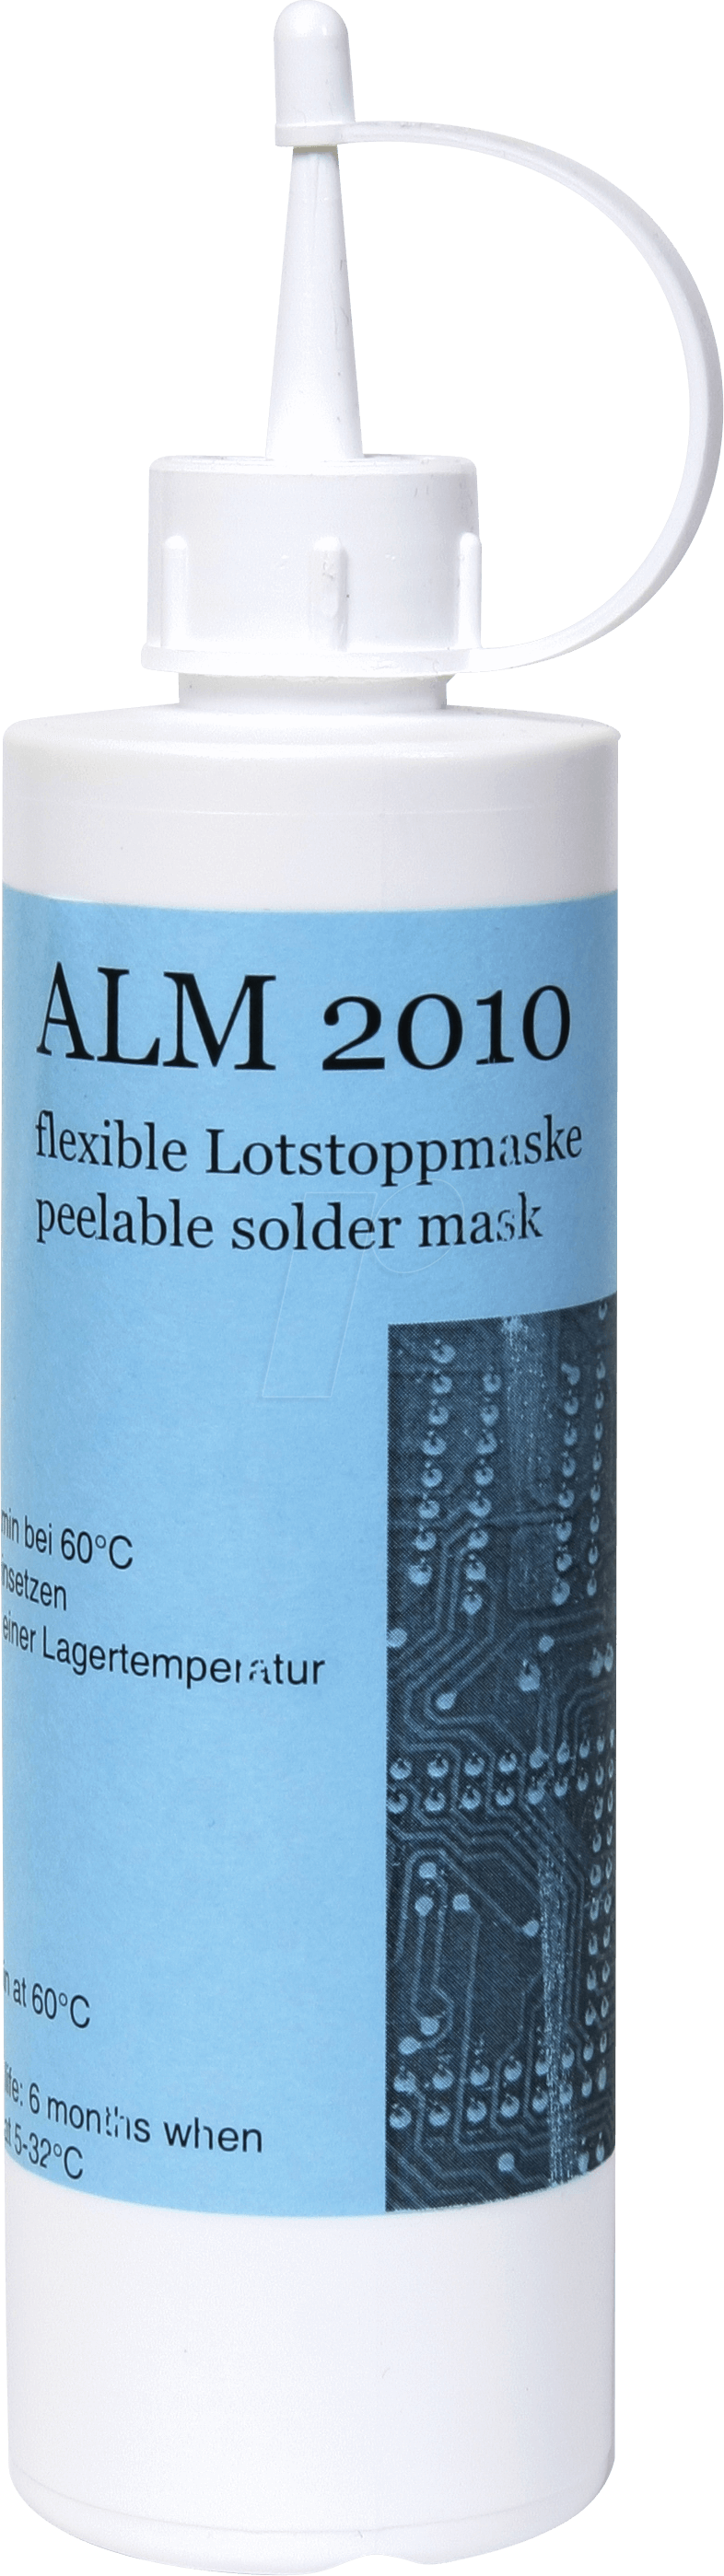 ALM 2010 - Lötstopmaske, flexibel, 250 ml von Edsyn